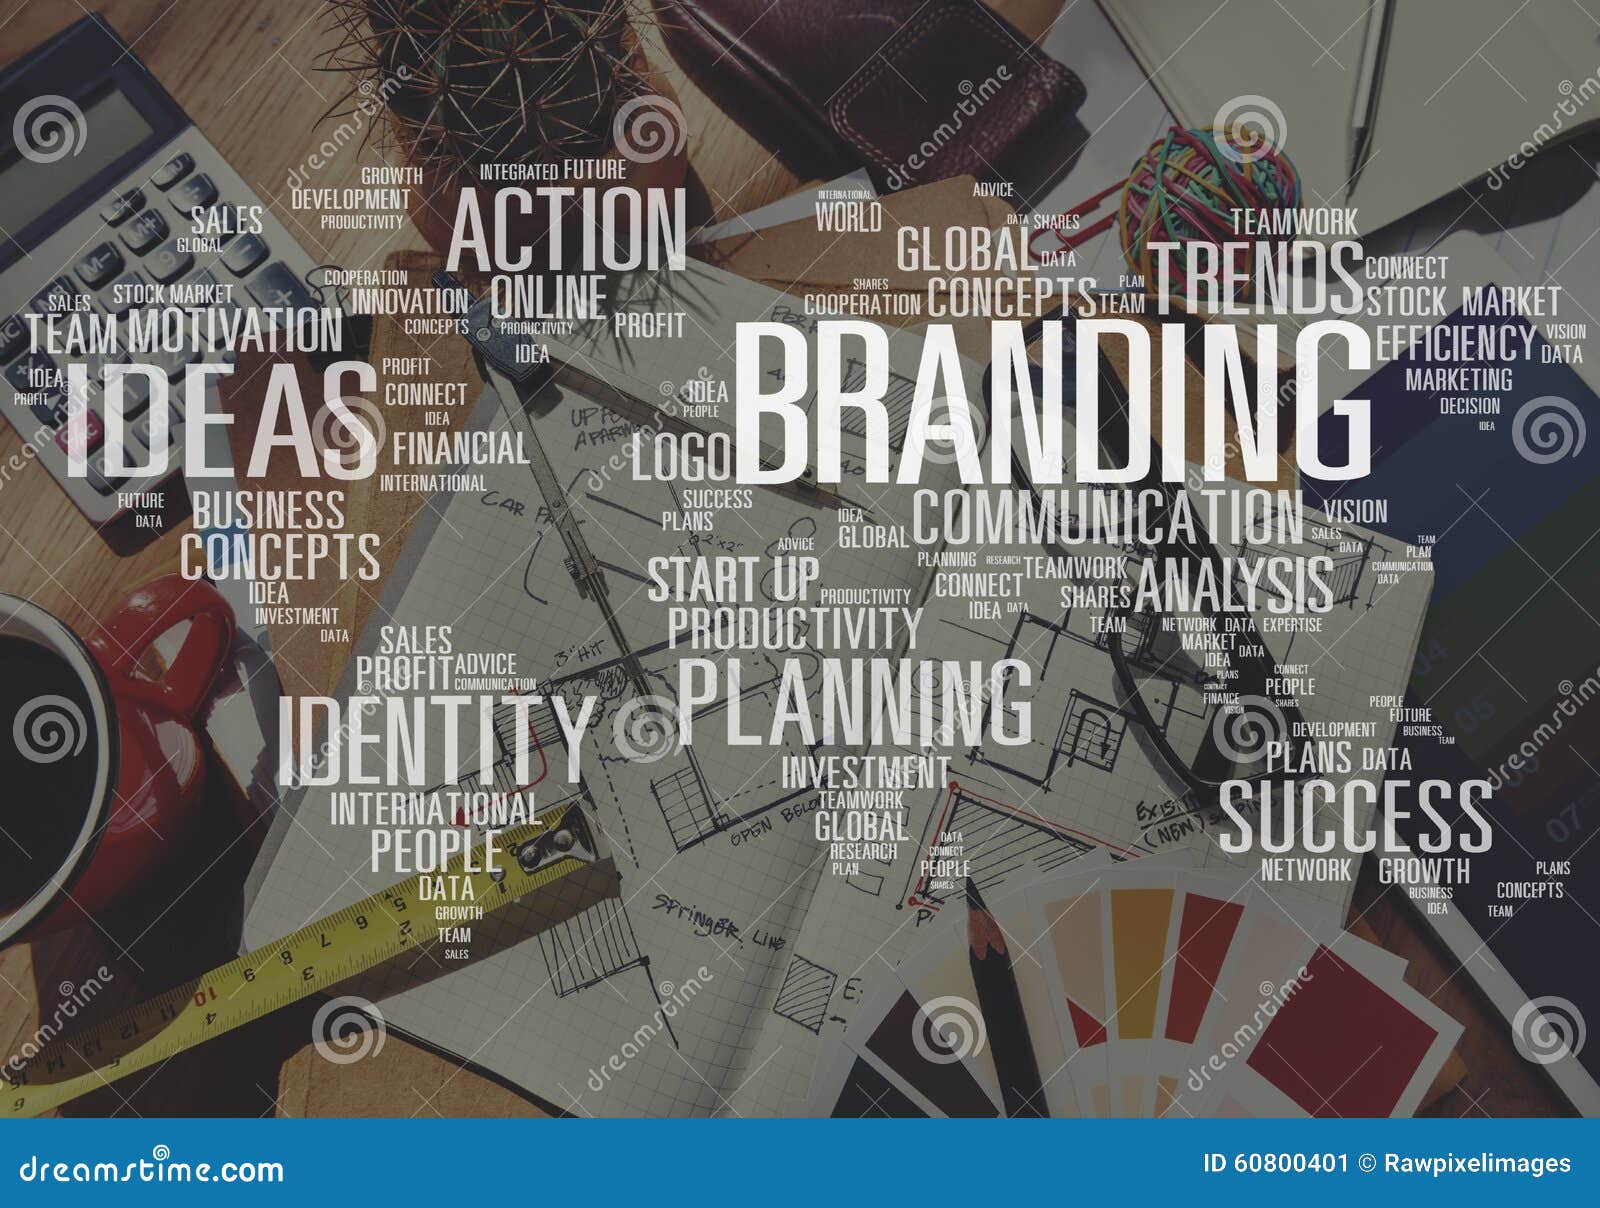 branding marketing advertising identity world trademark concept